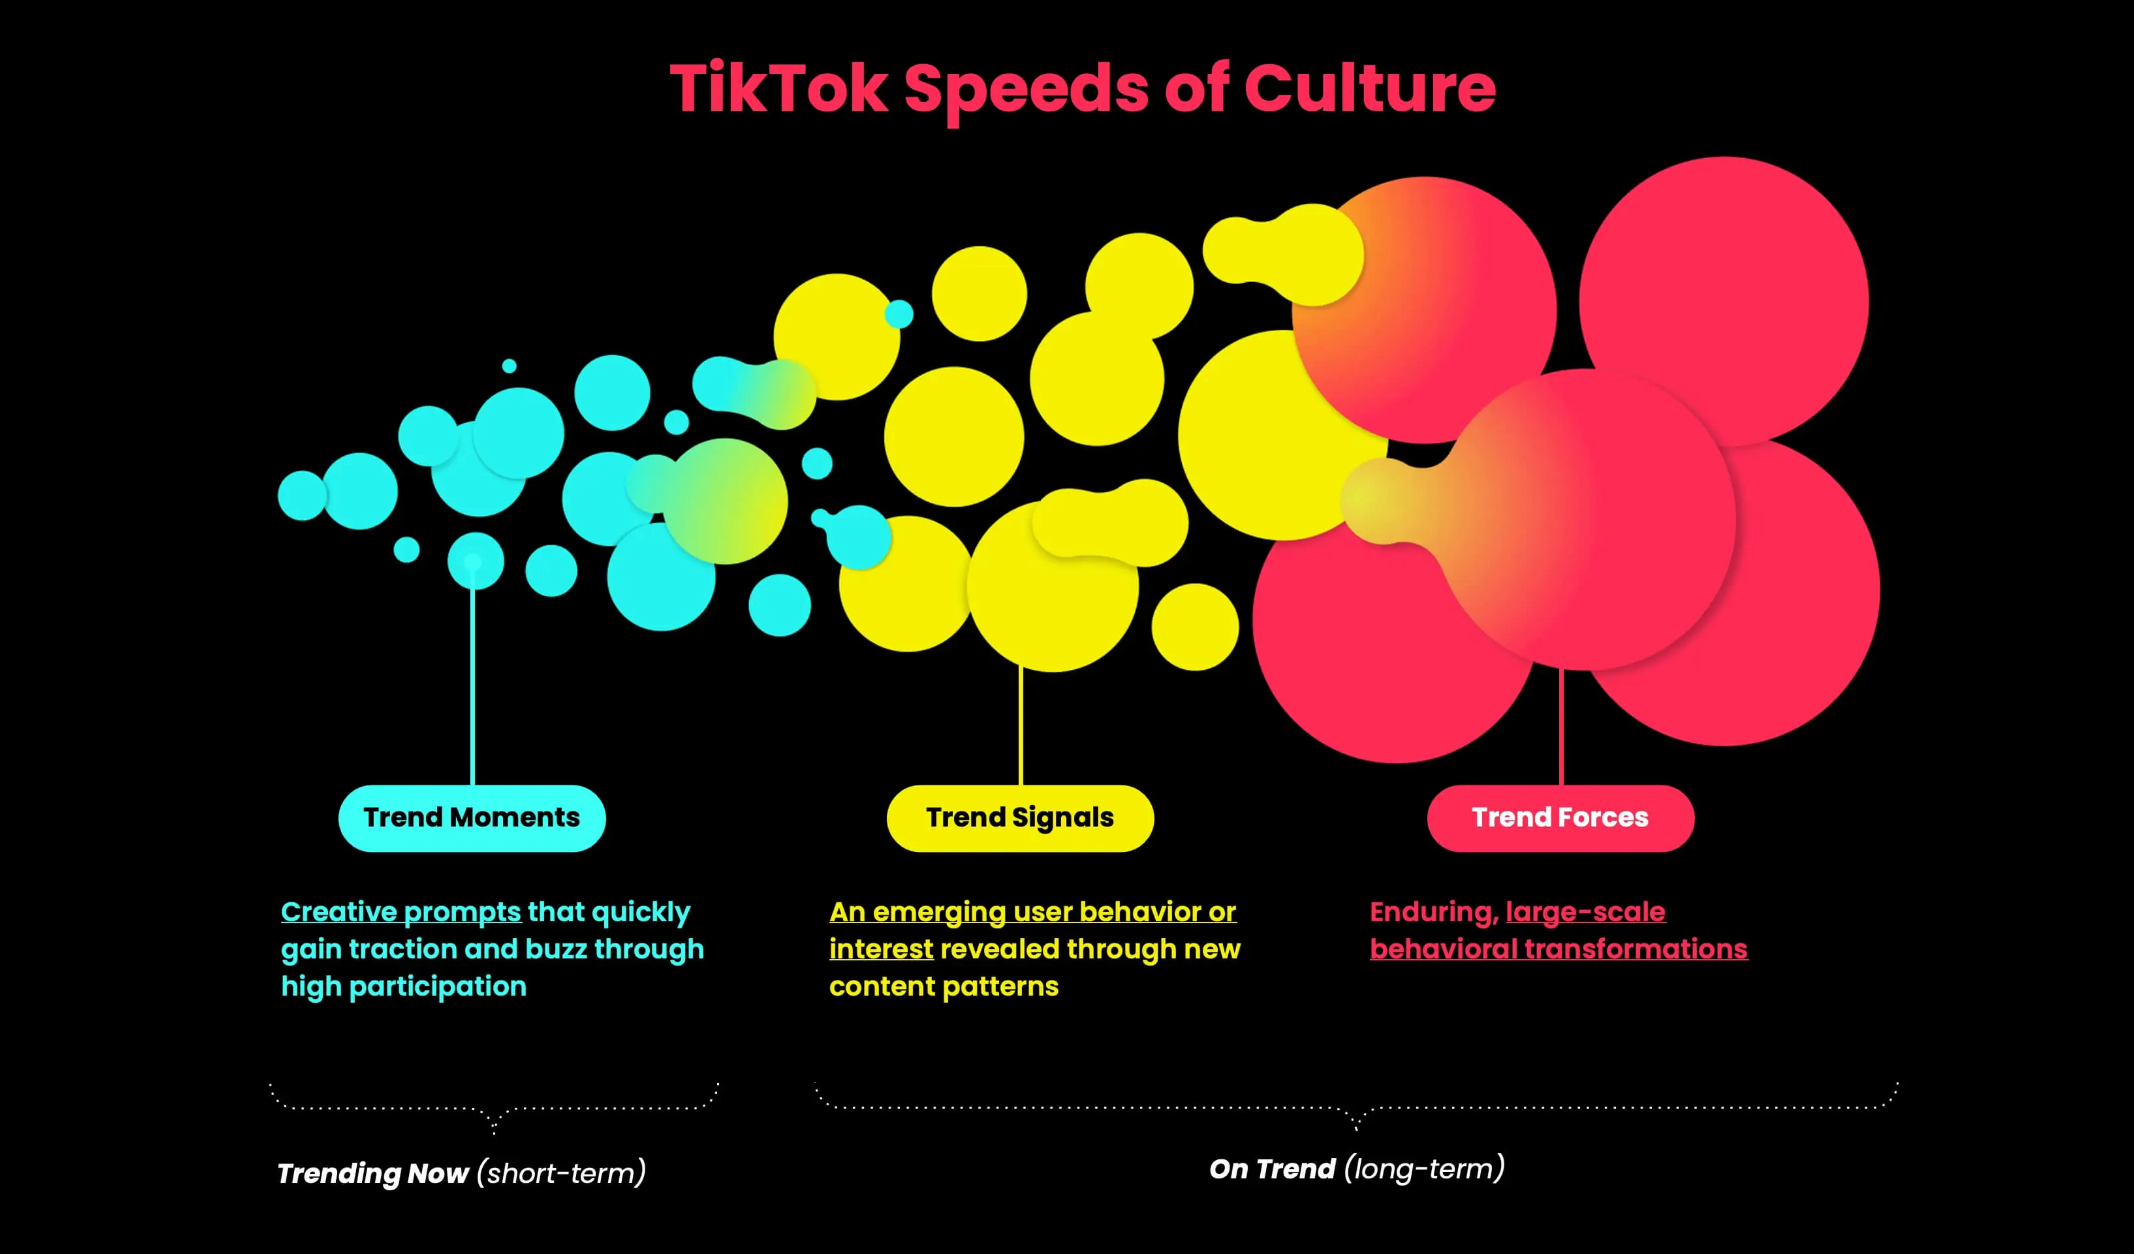 Tiktok speeds of culture chart